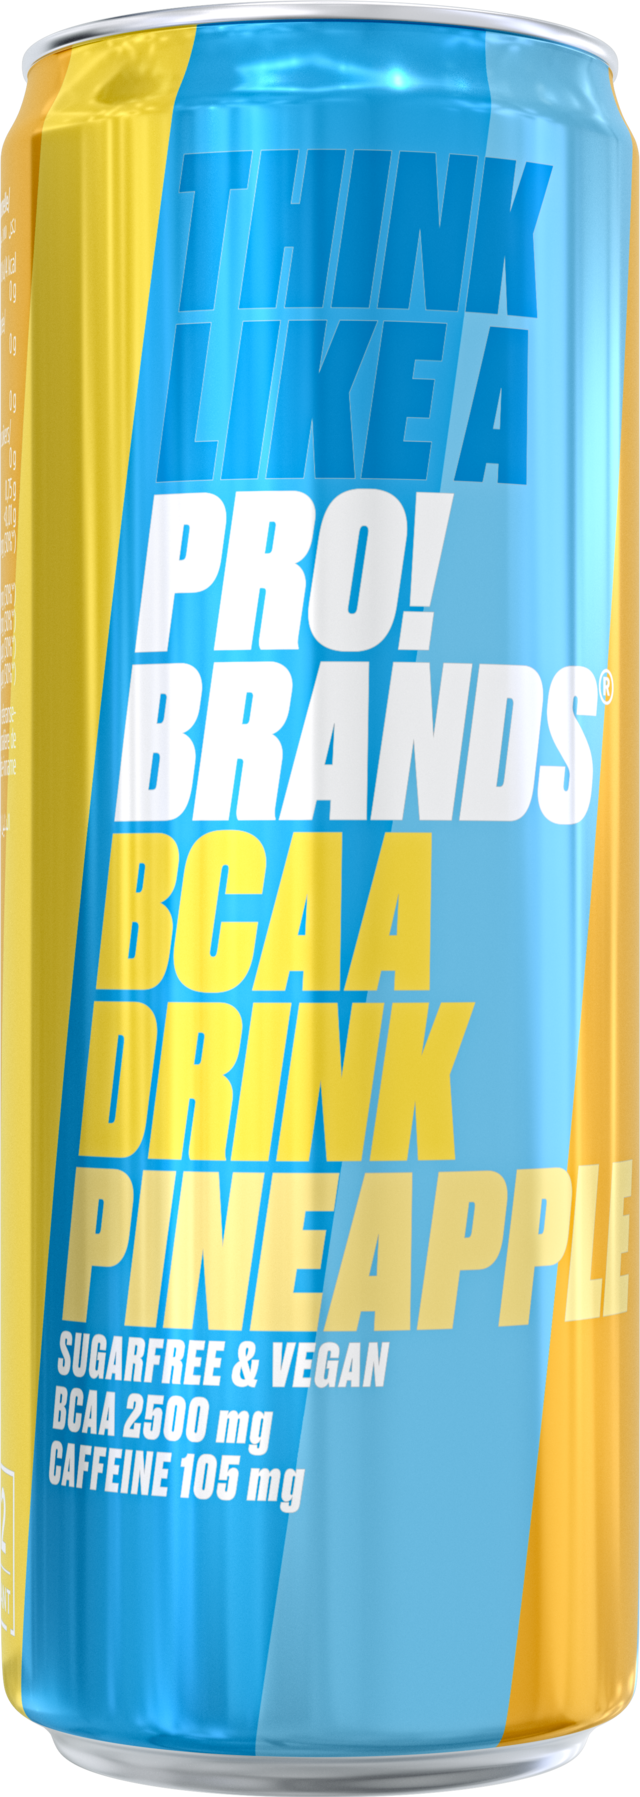 PB_BCAA_Drink_Pineapple_export_330ml.1.png